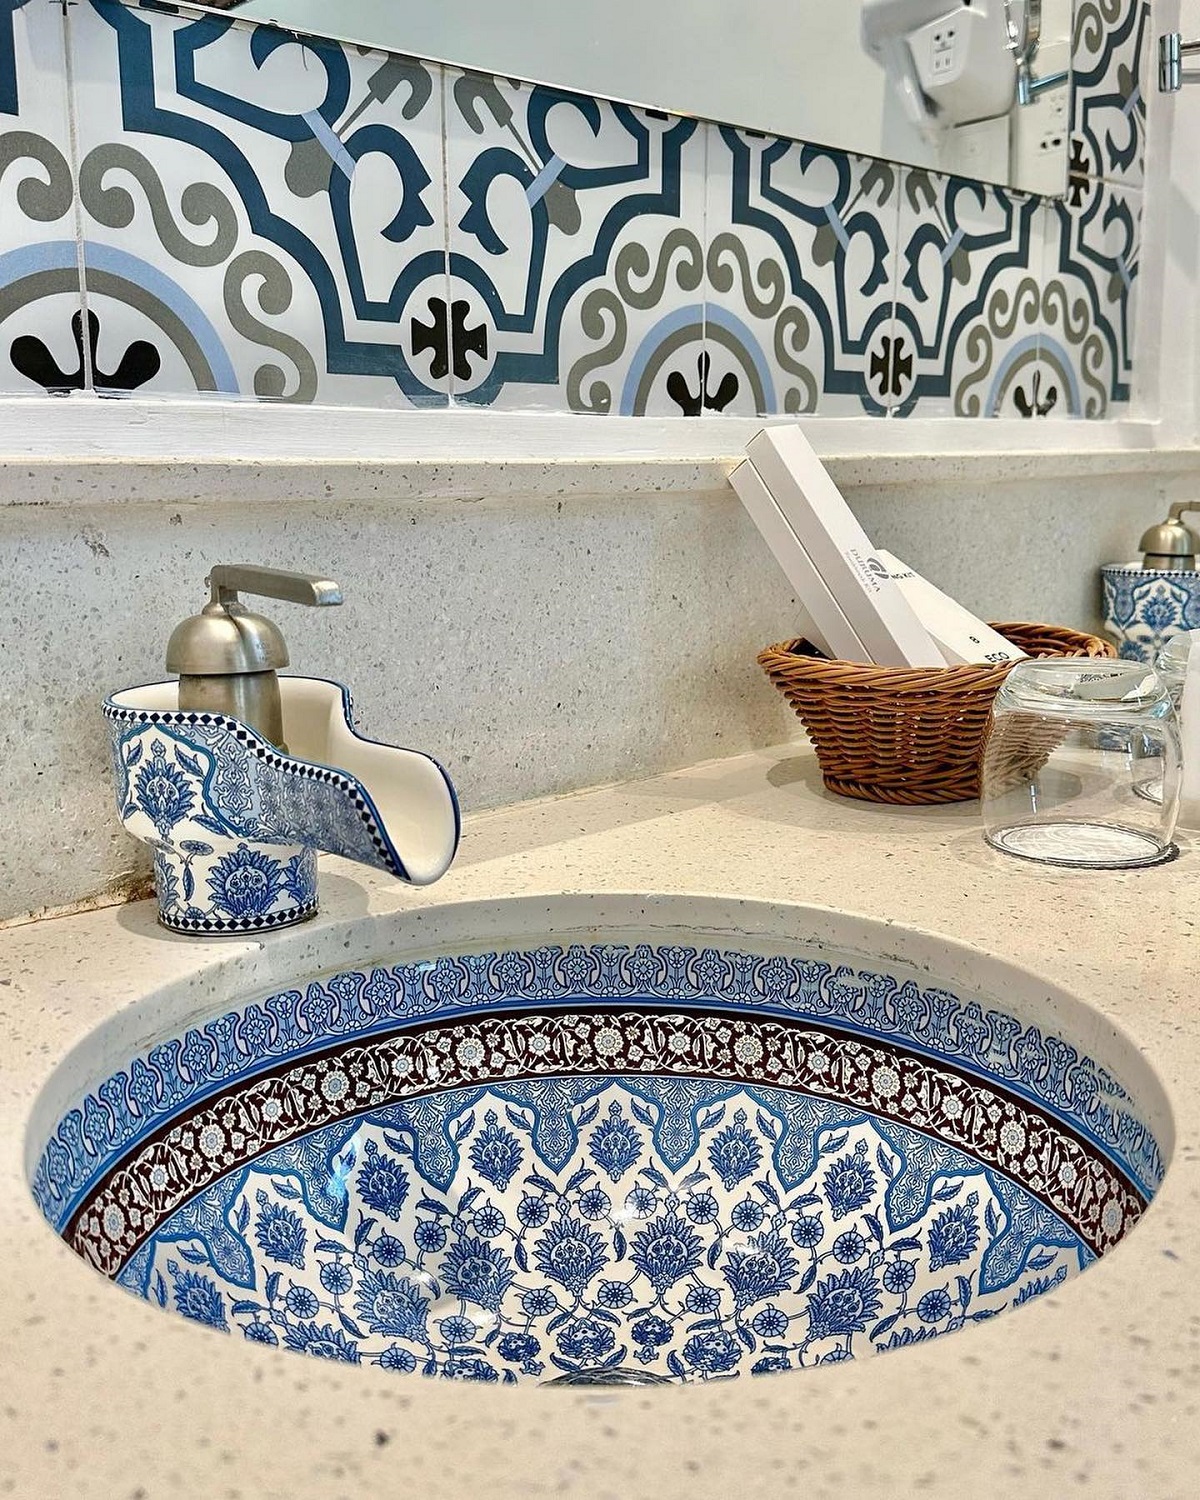 blue arabic inspired ceramic basin and tap